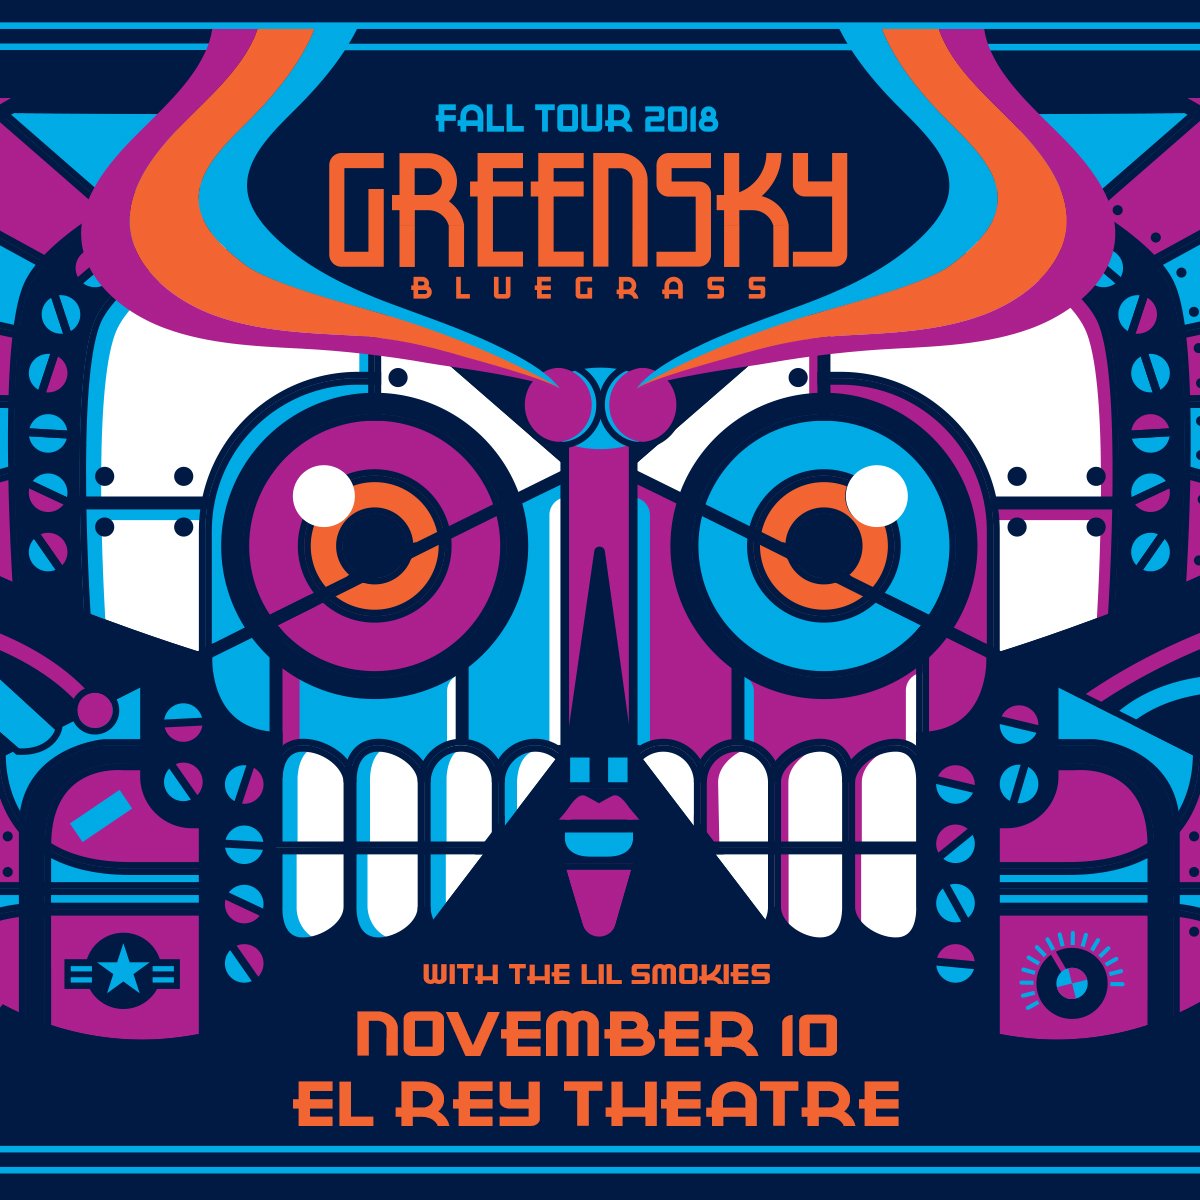 GIVEAWAY - Win tickets to Greensky Bluegrass at El Rey Theatre (LA) 11/10